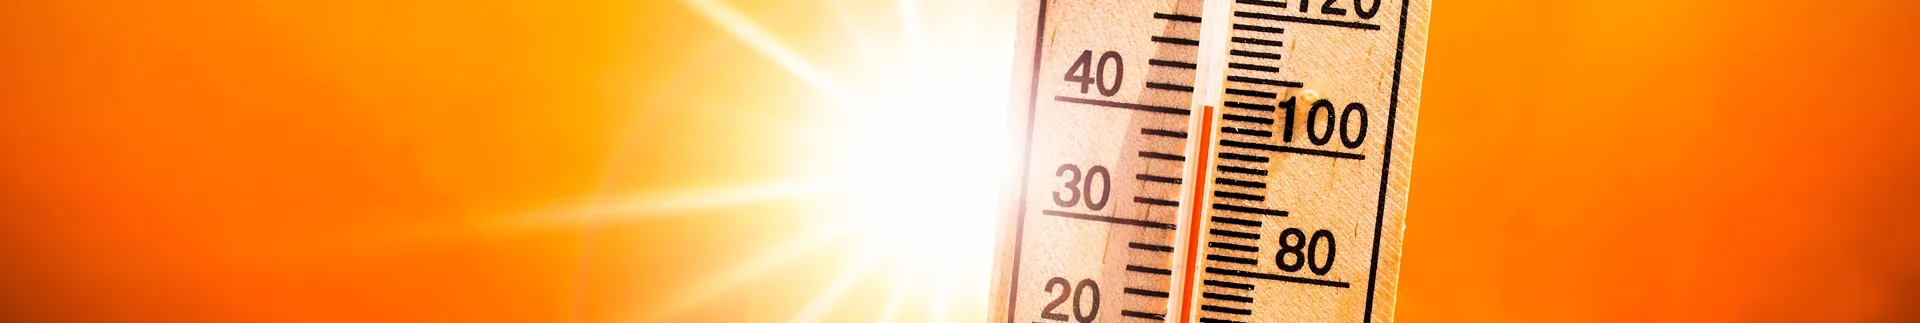 Reduce Heat Article